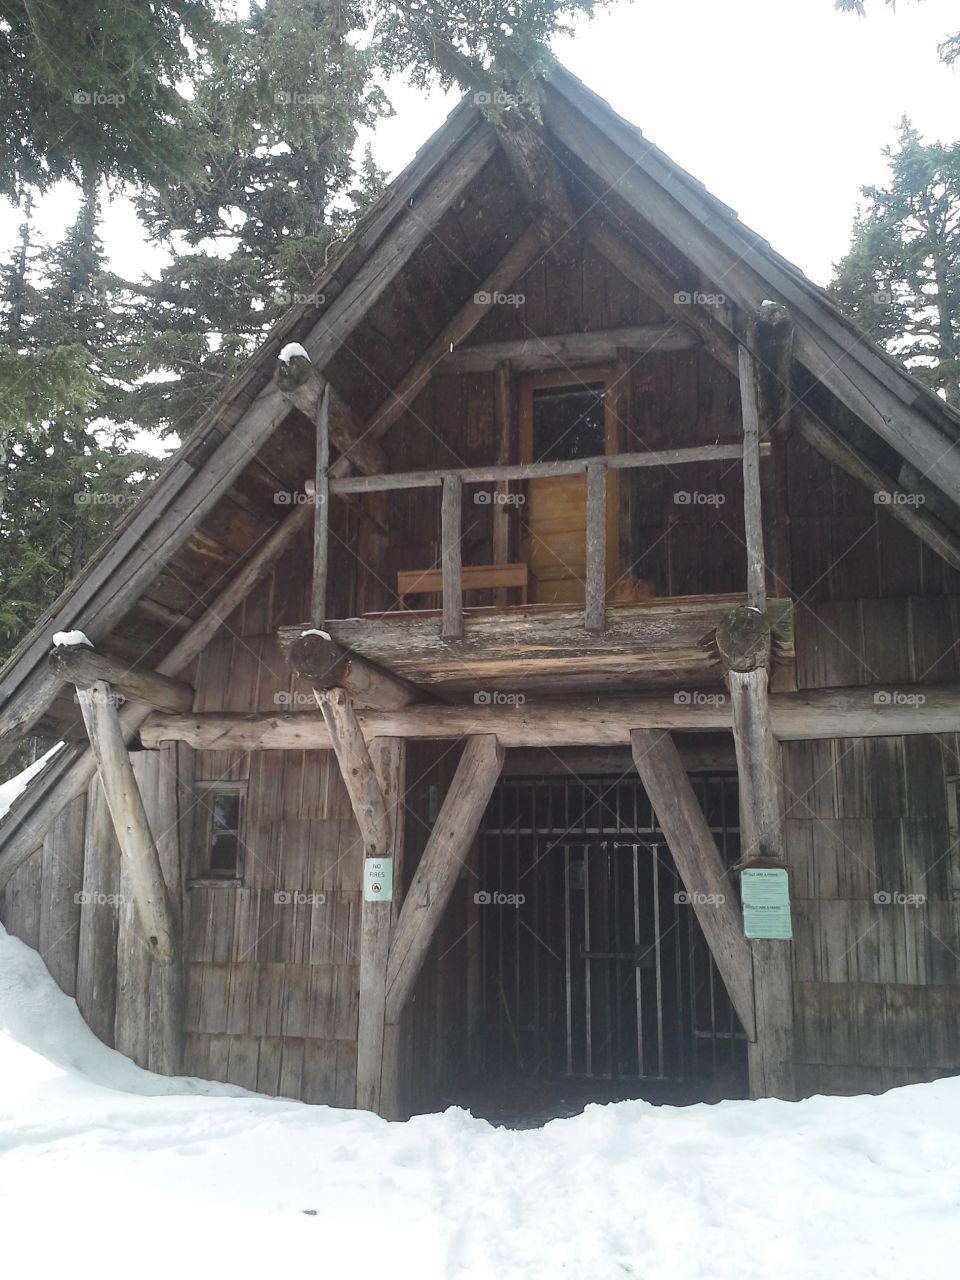 Tilly Jane cabin MT. Hood